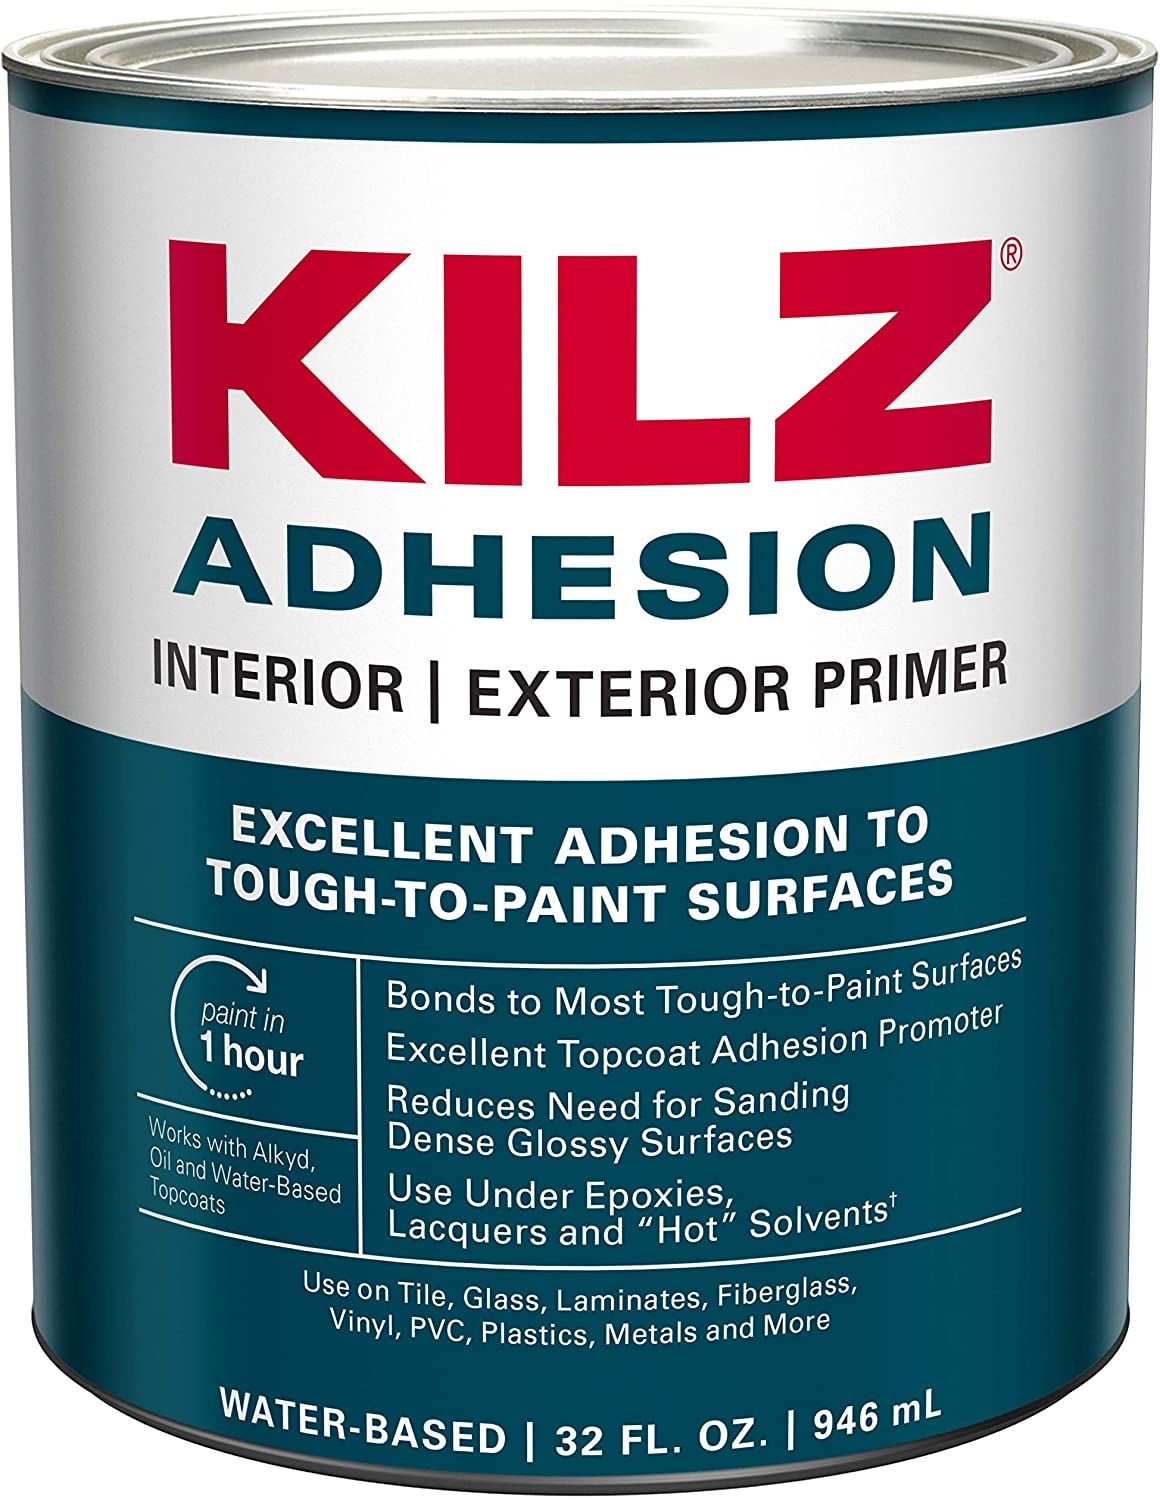 KILZ Adhesion Interior/Exterior Primer